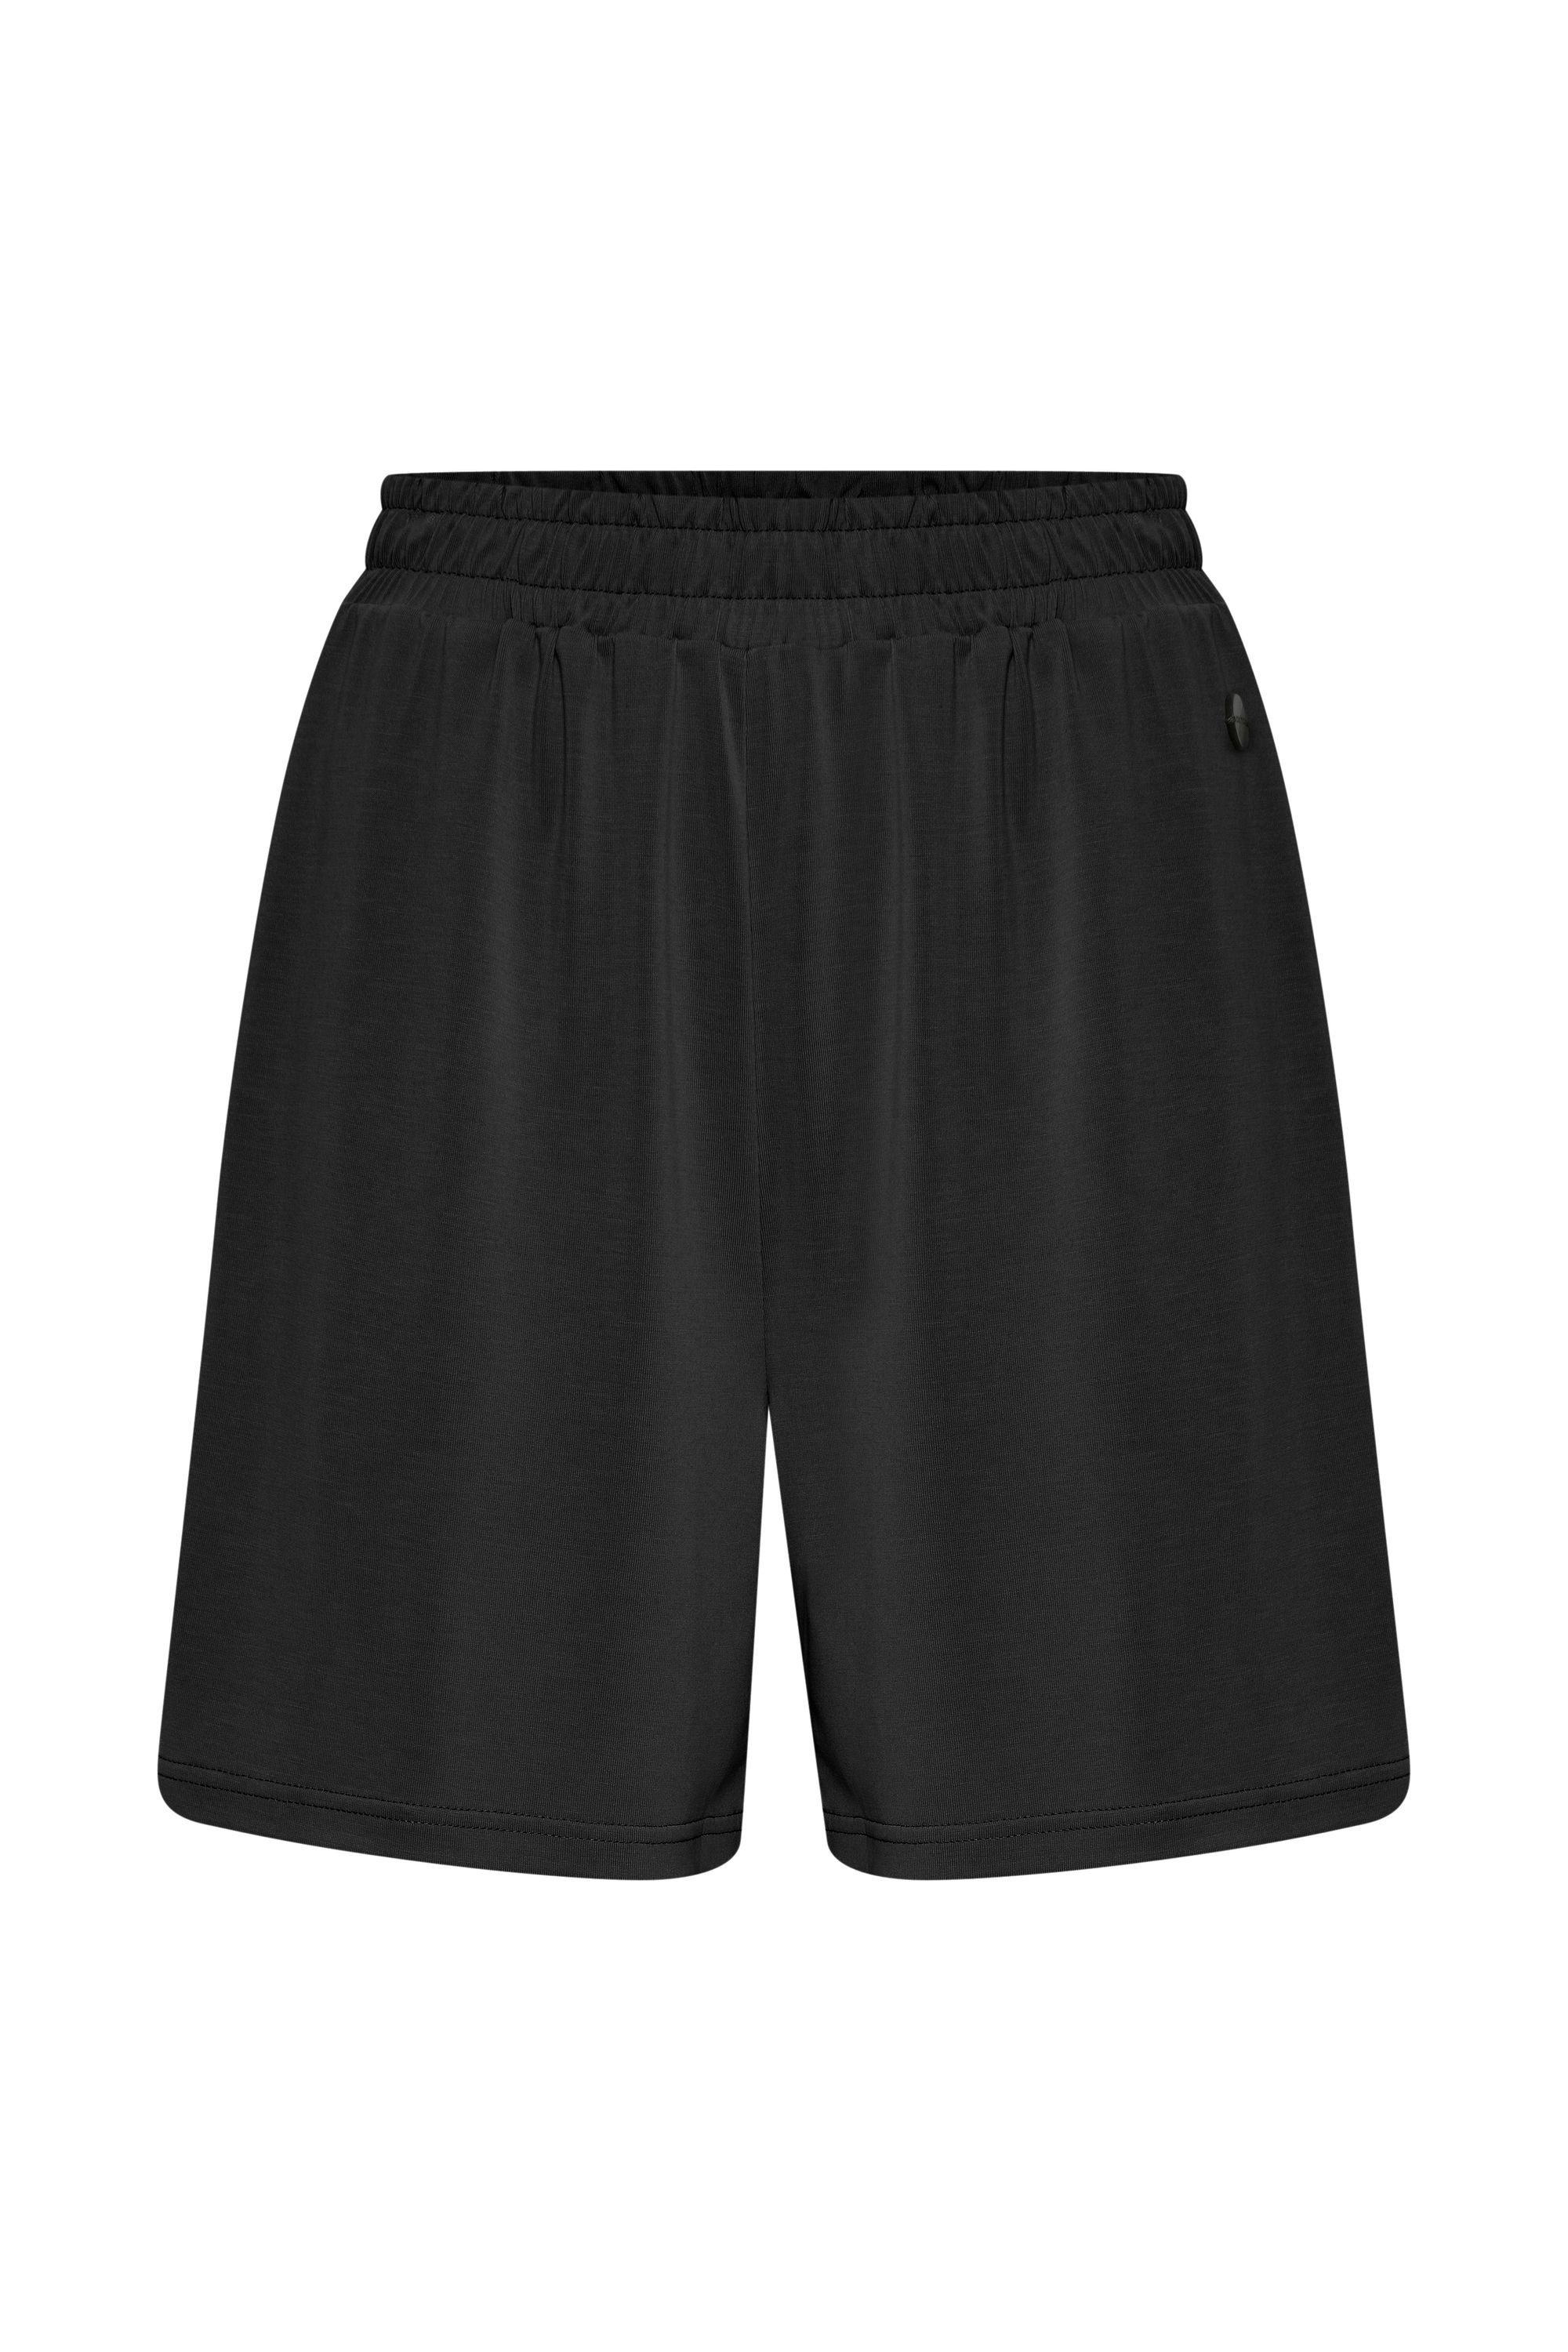 Shorts (194007) OXMO Black BJÖRK